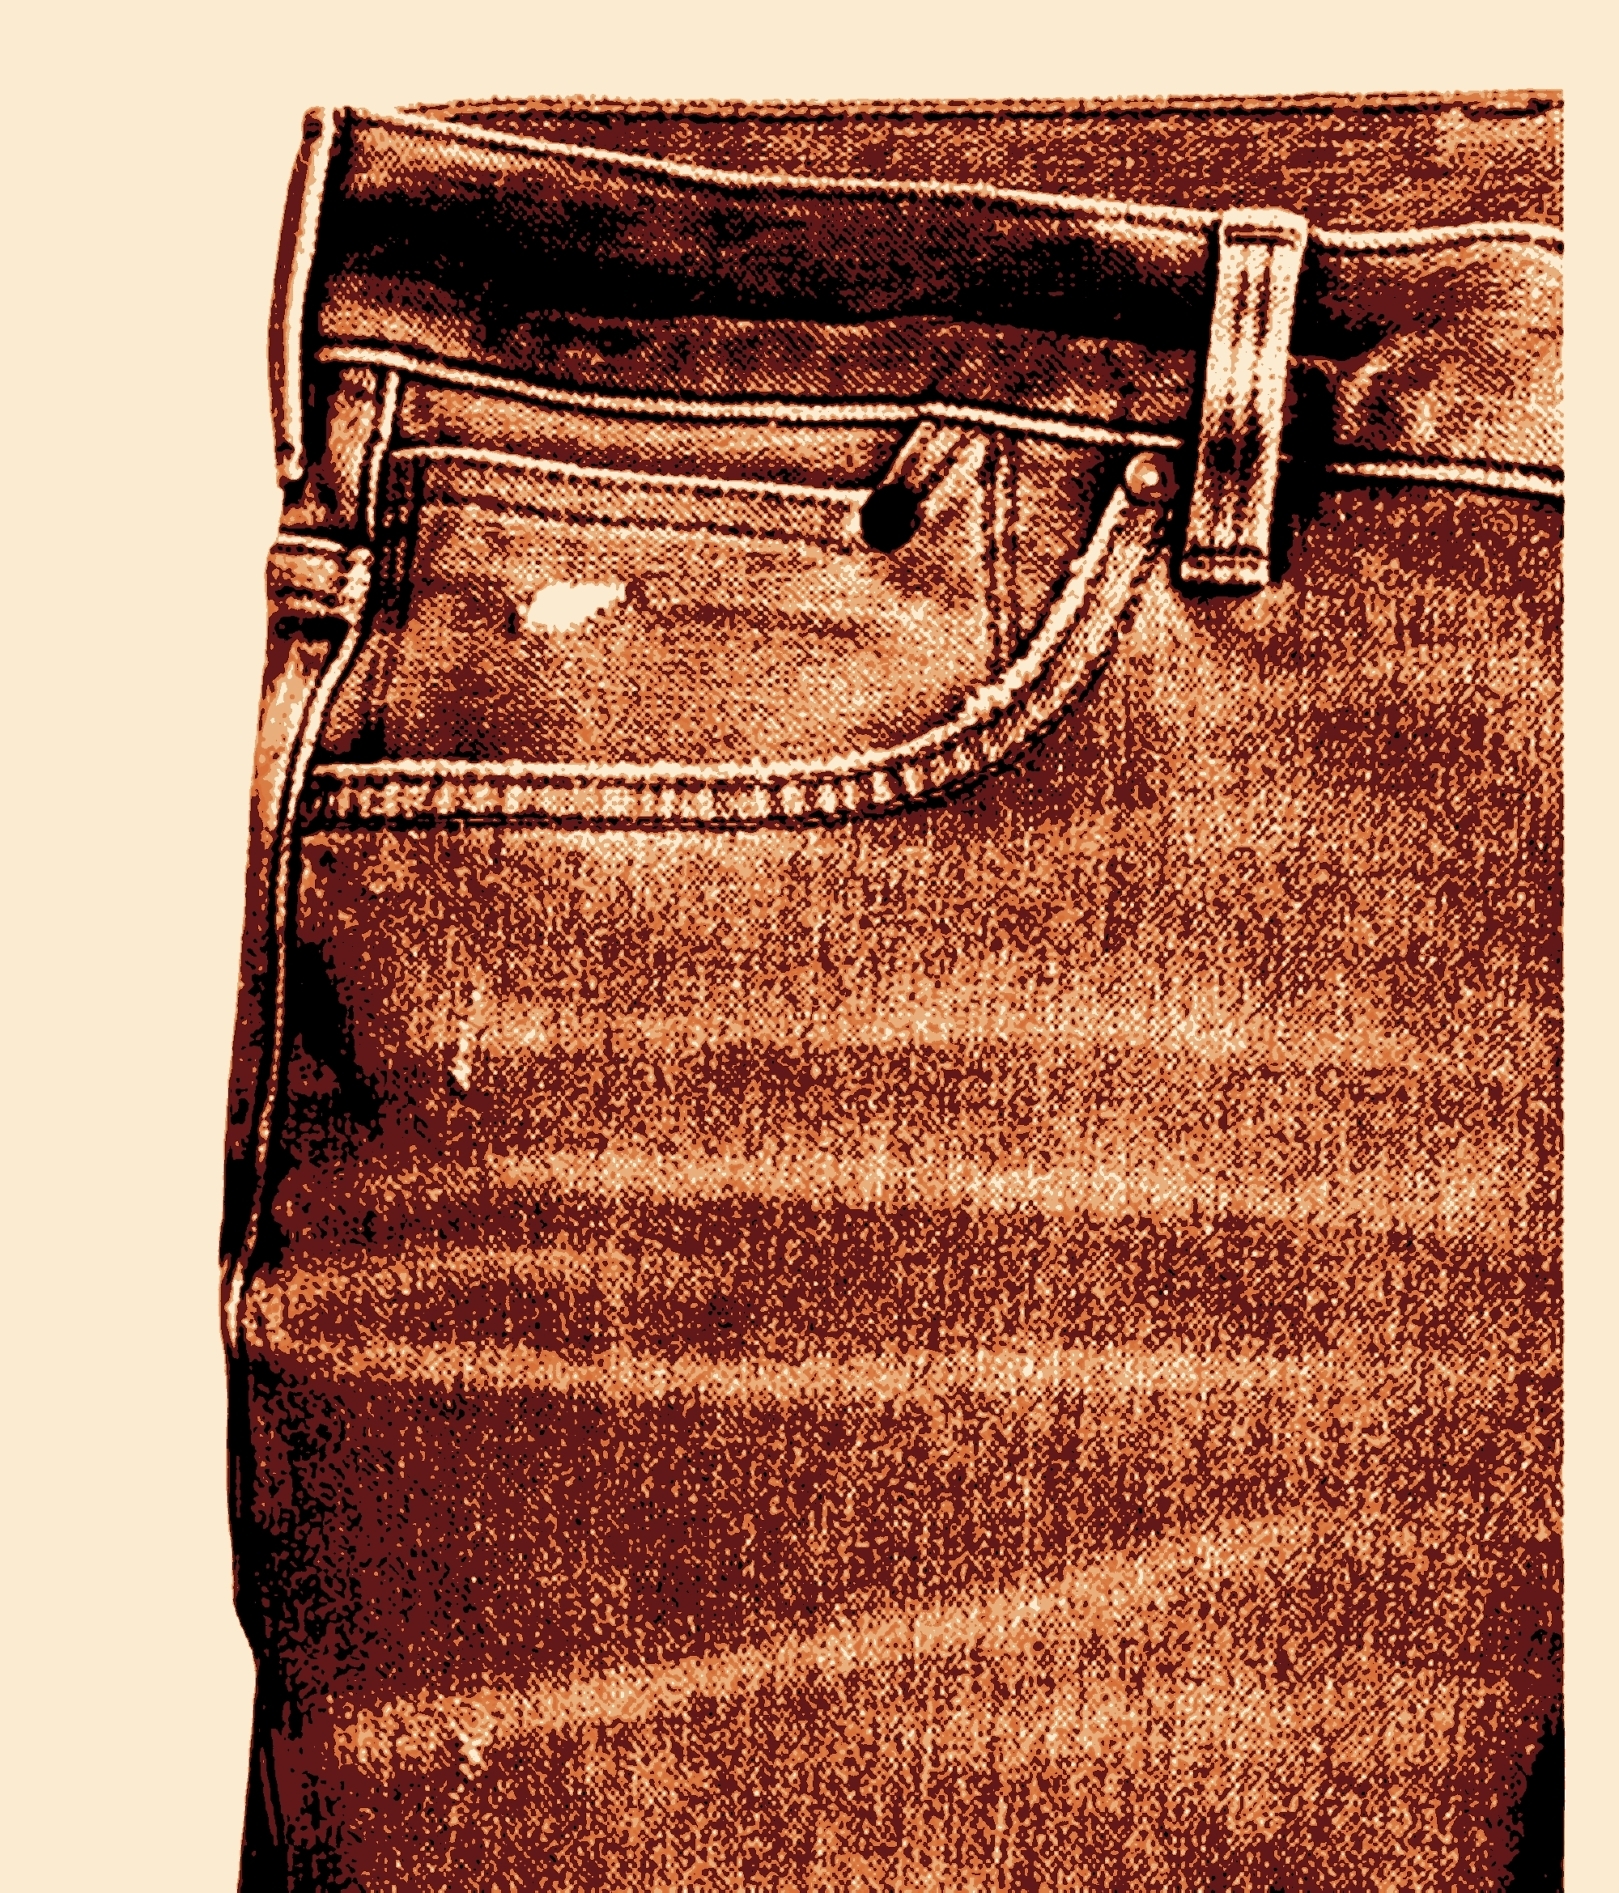 modellierte Betonobjekte: Jeans in Beton